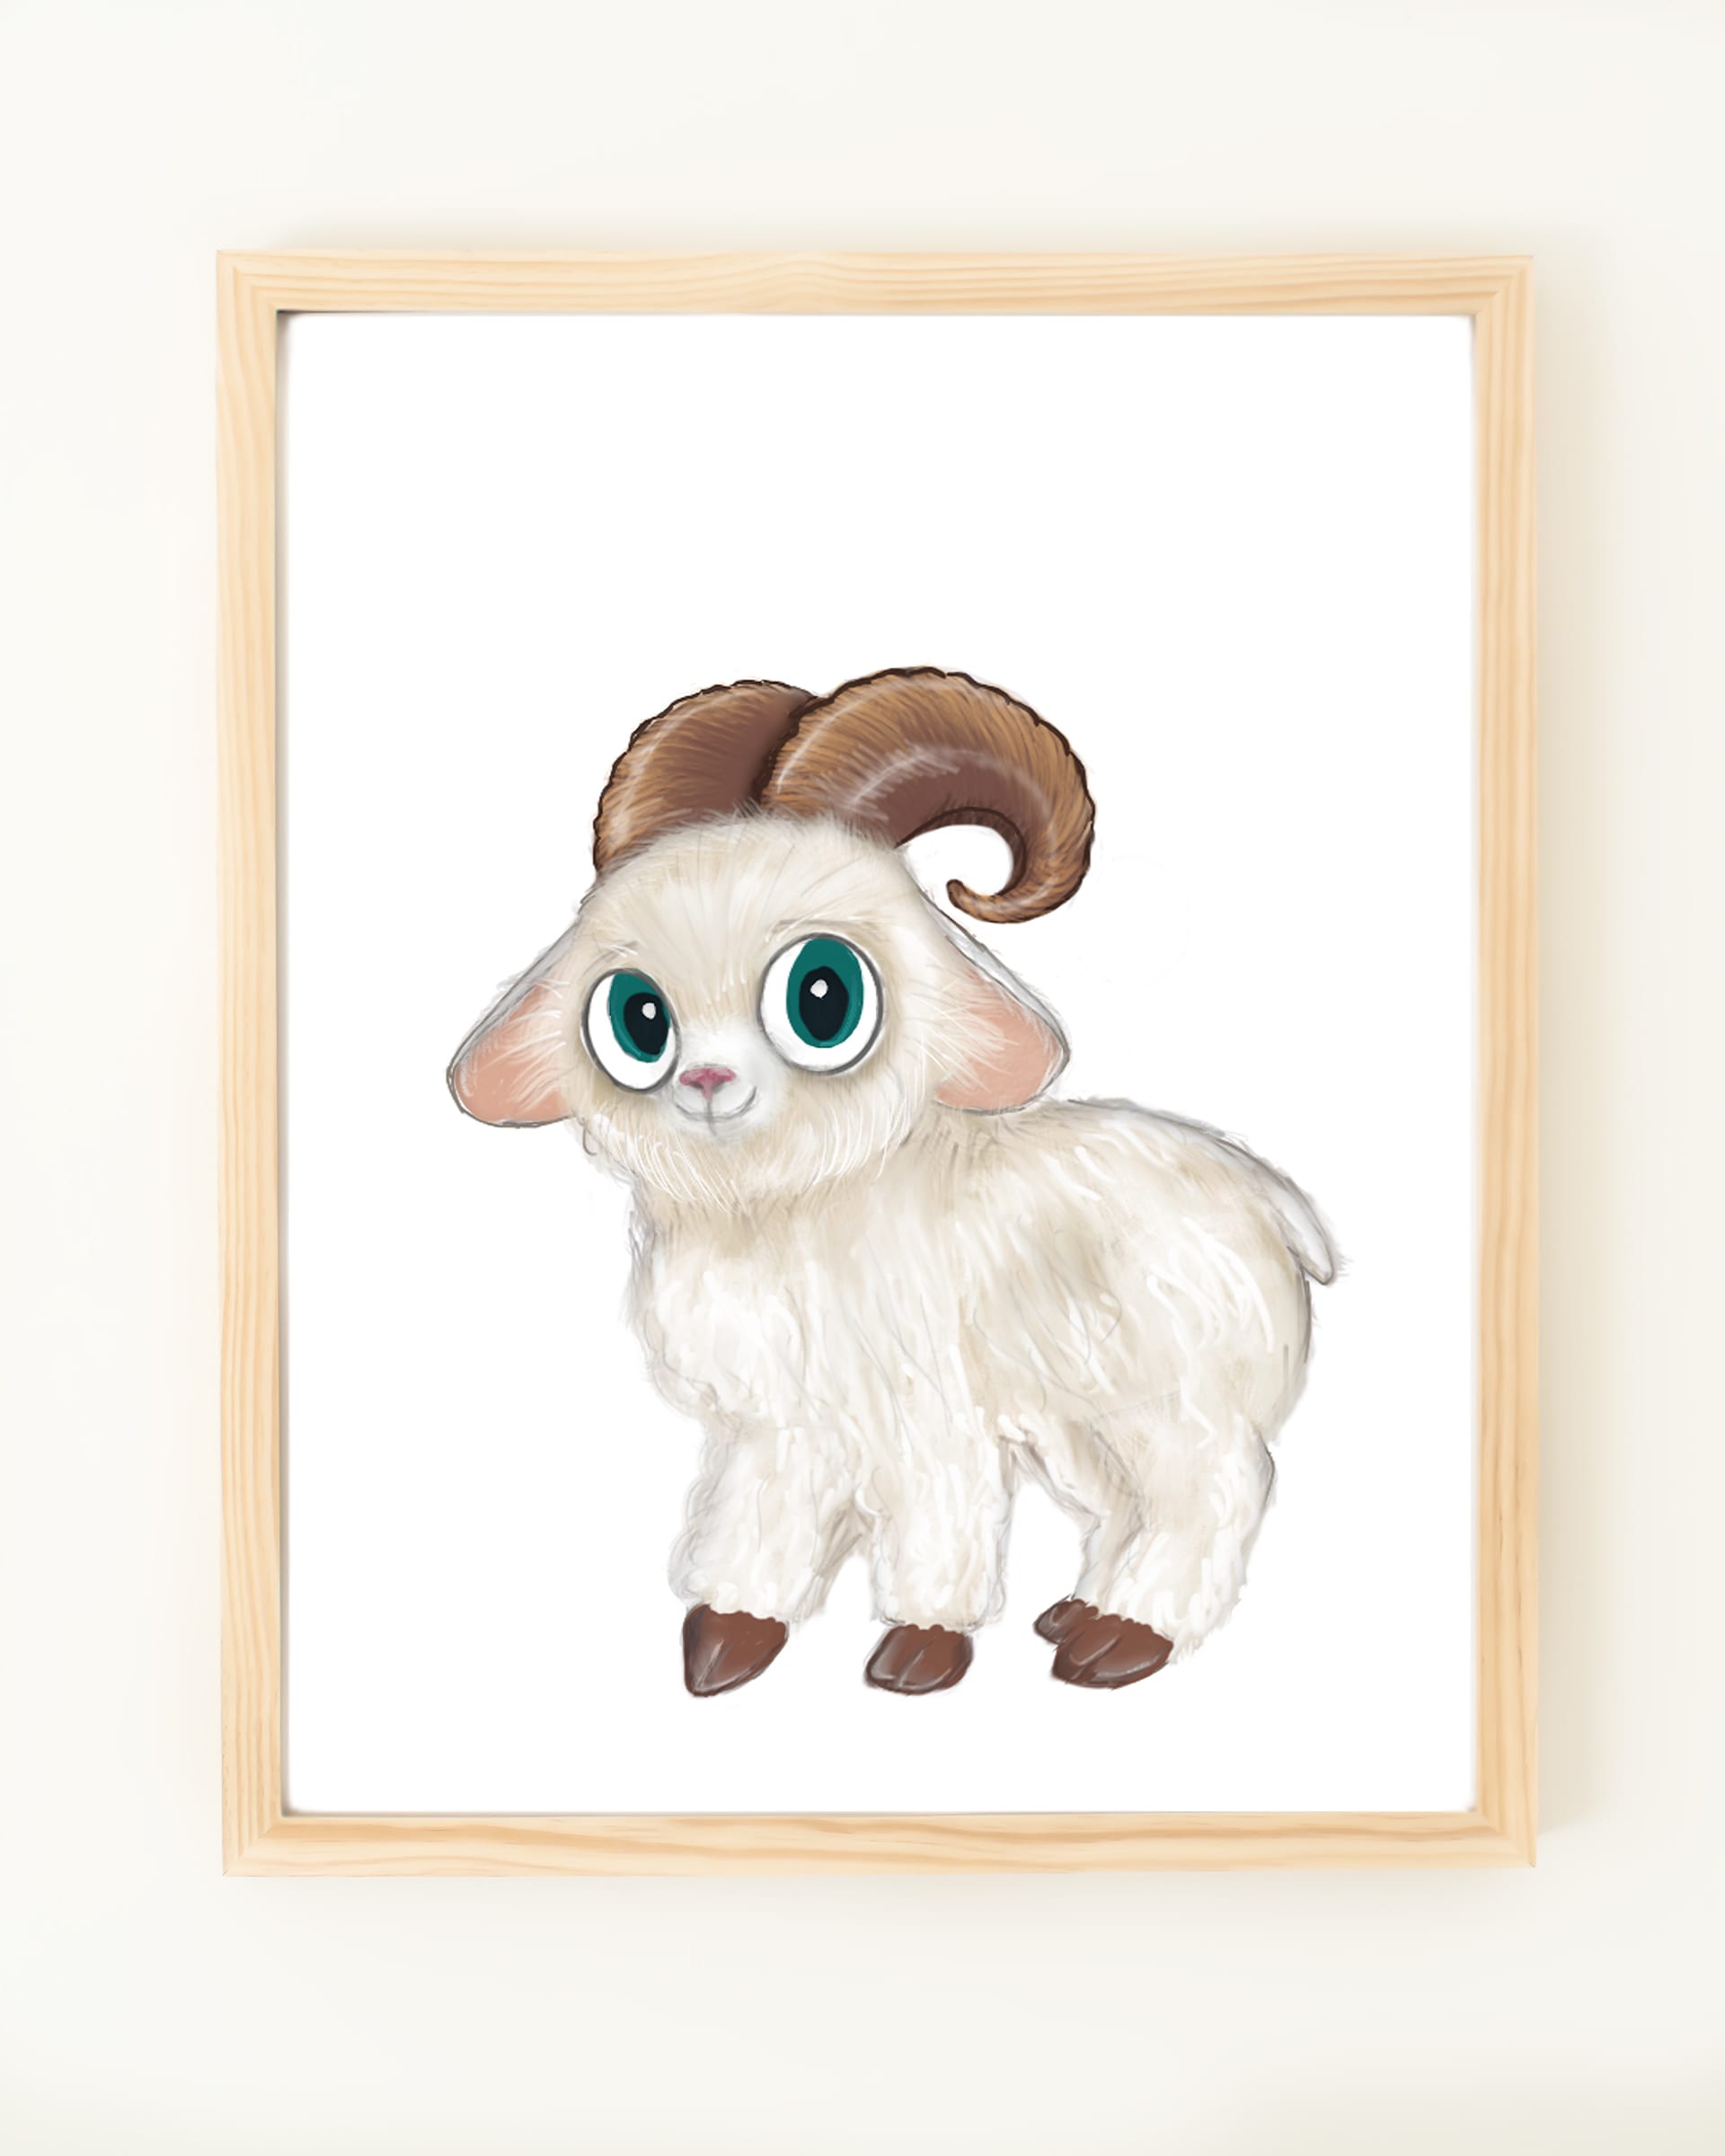 Framed hand drawn nursery decor wall art poster cute baby sheep farm animal